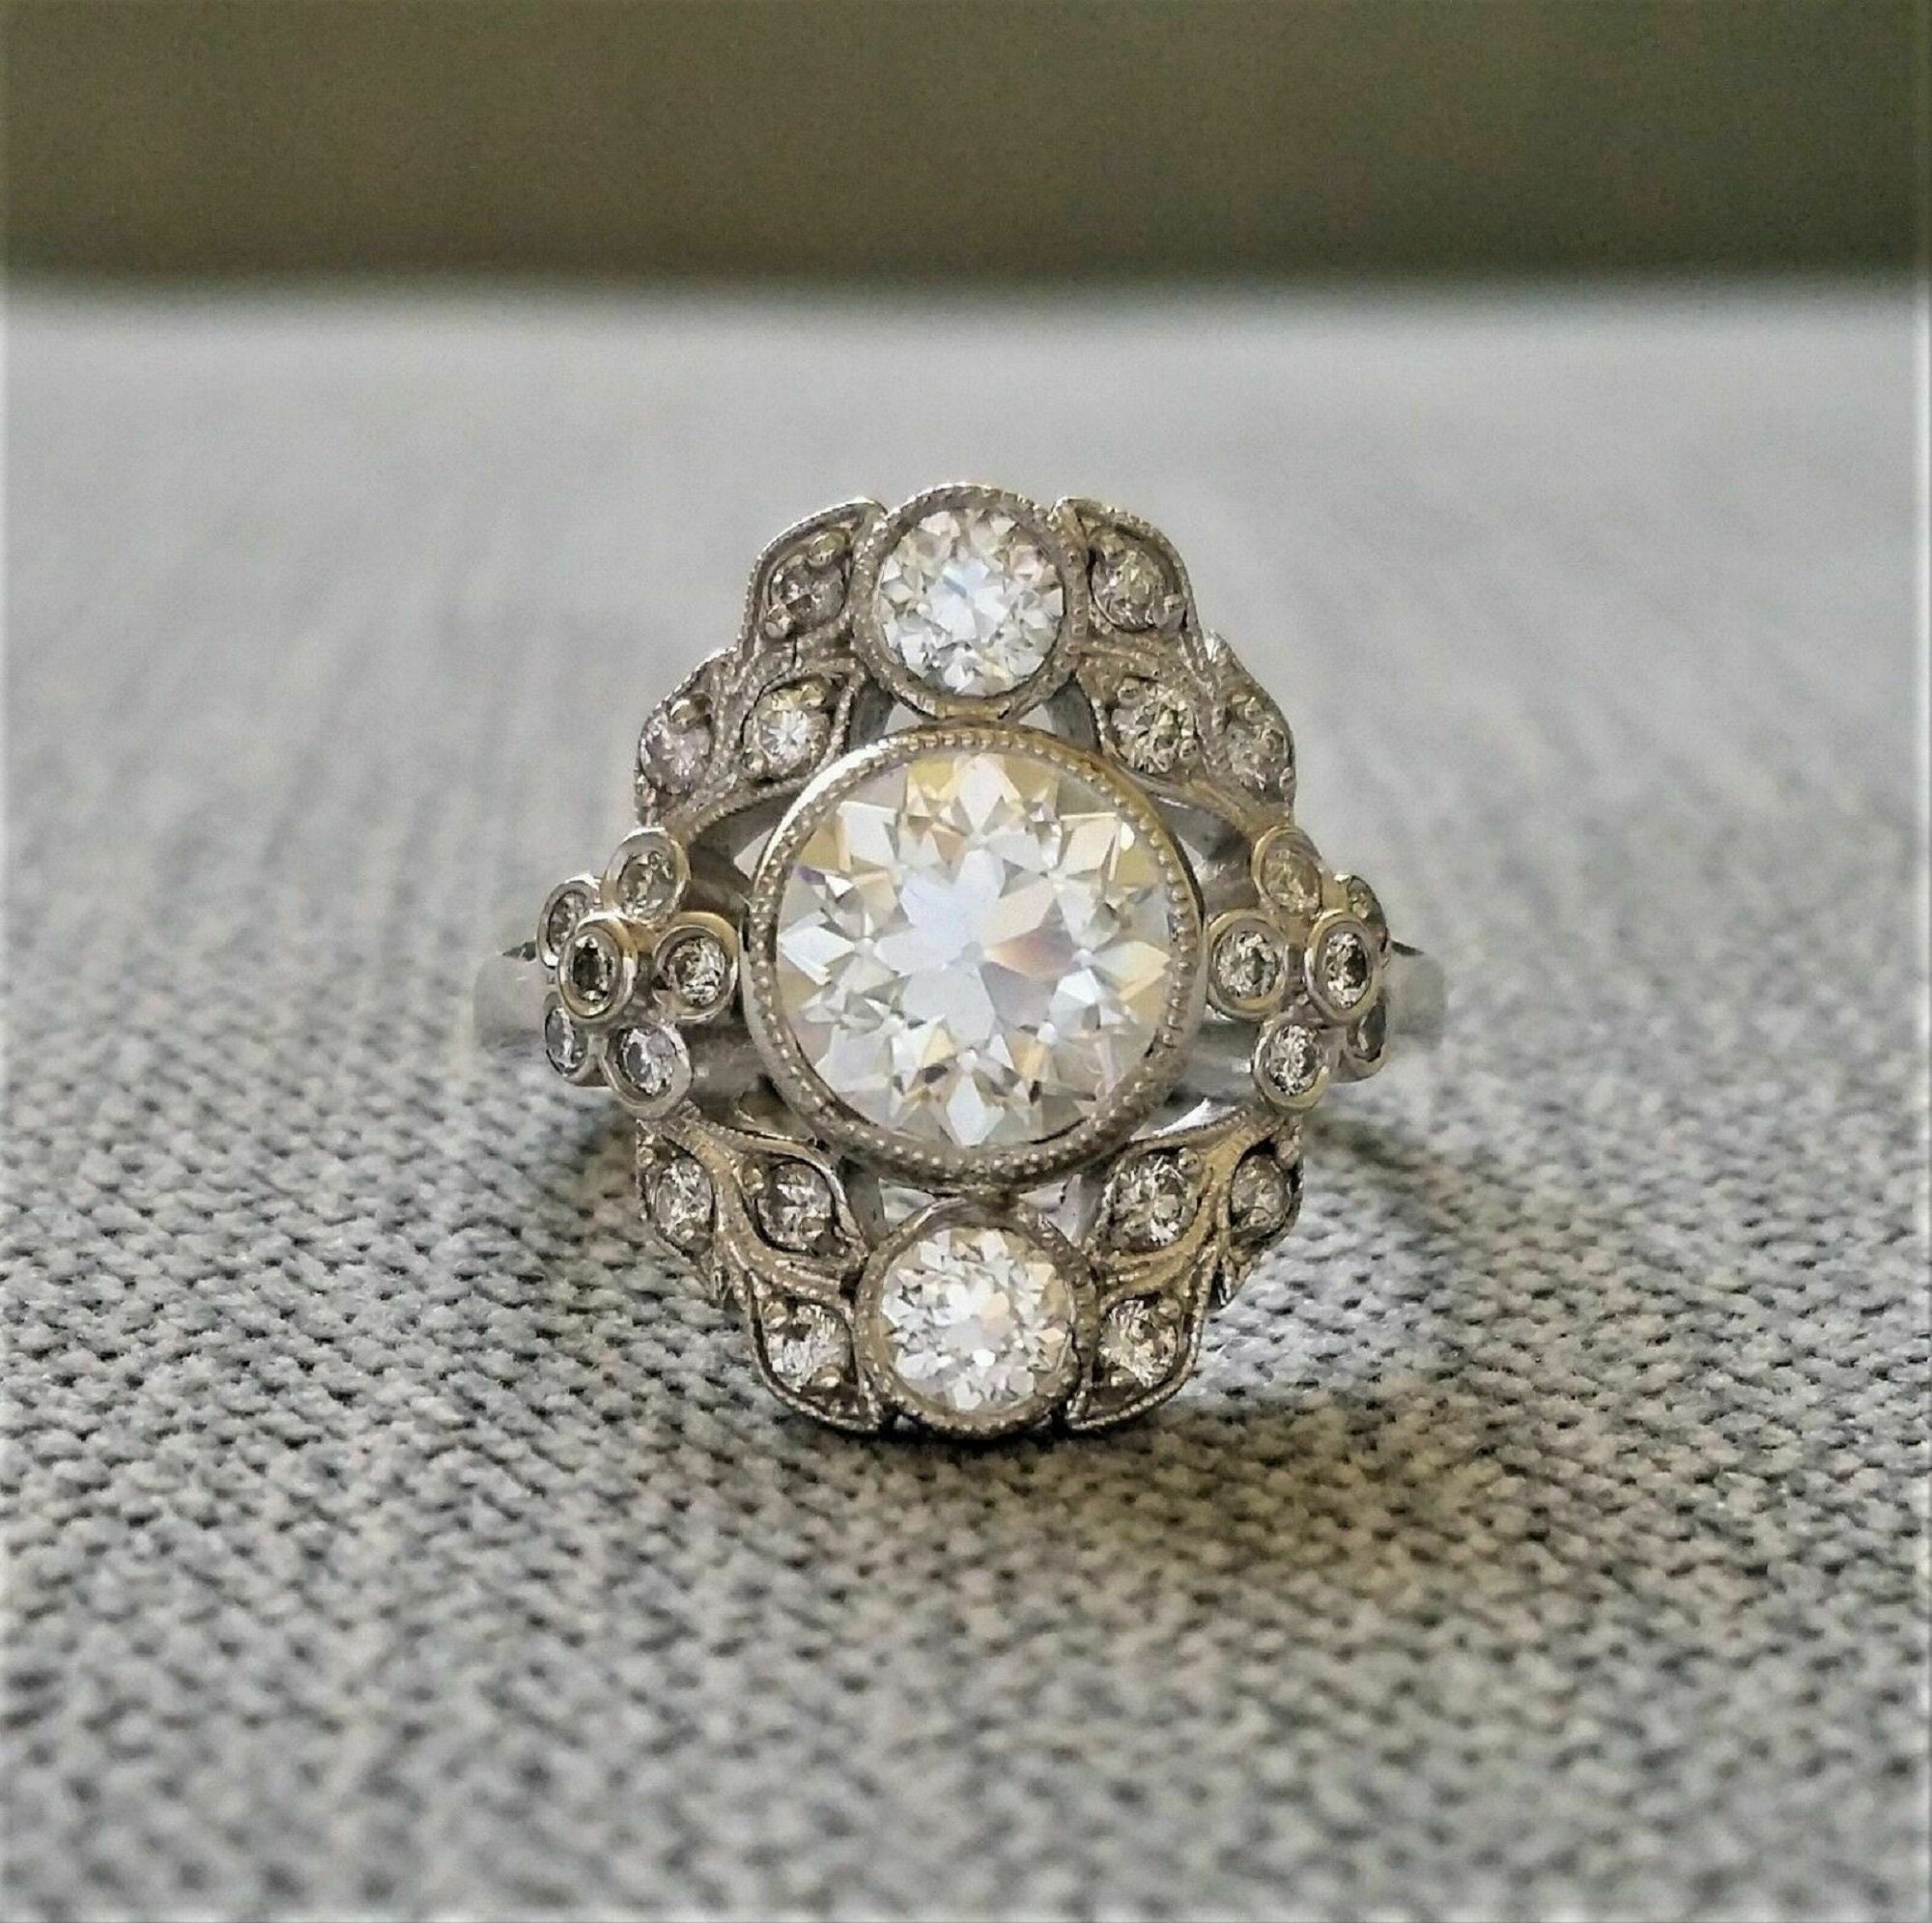 3.00Ct Round Cut Diamond Antique Art Deco Engagement Ring 14K White Gold Finish